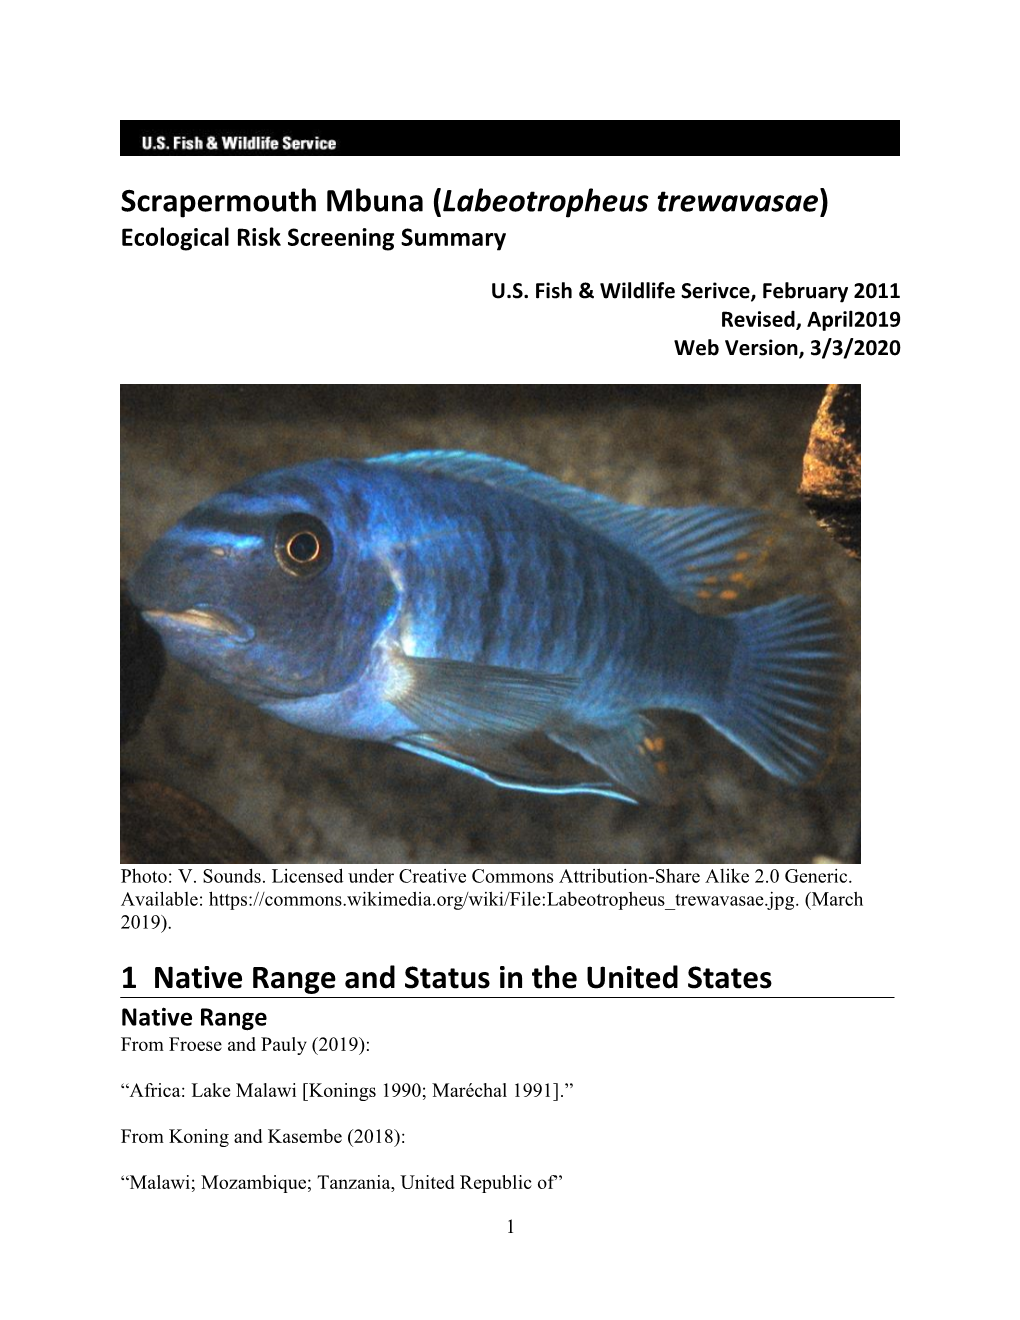 Labeotropheus Trewavasae) Ecological Risk Screening Summary